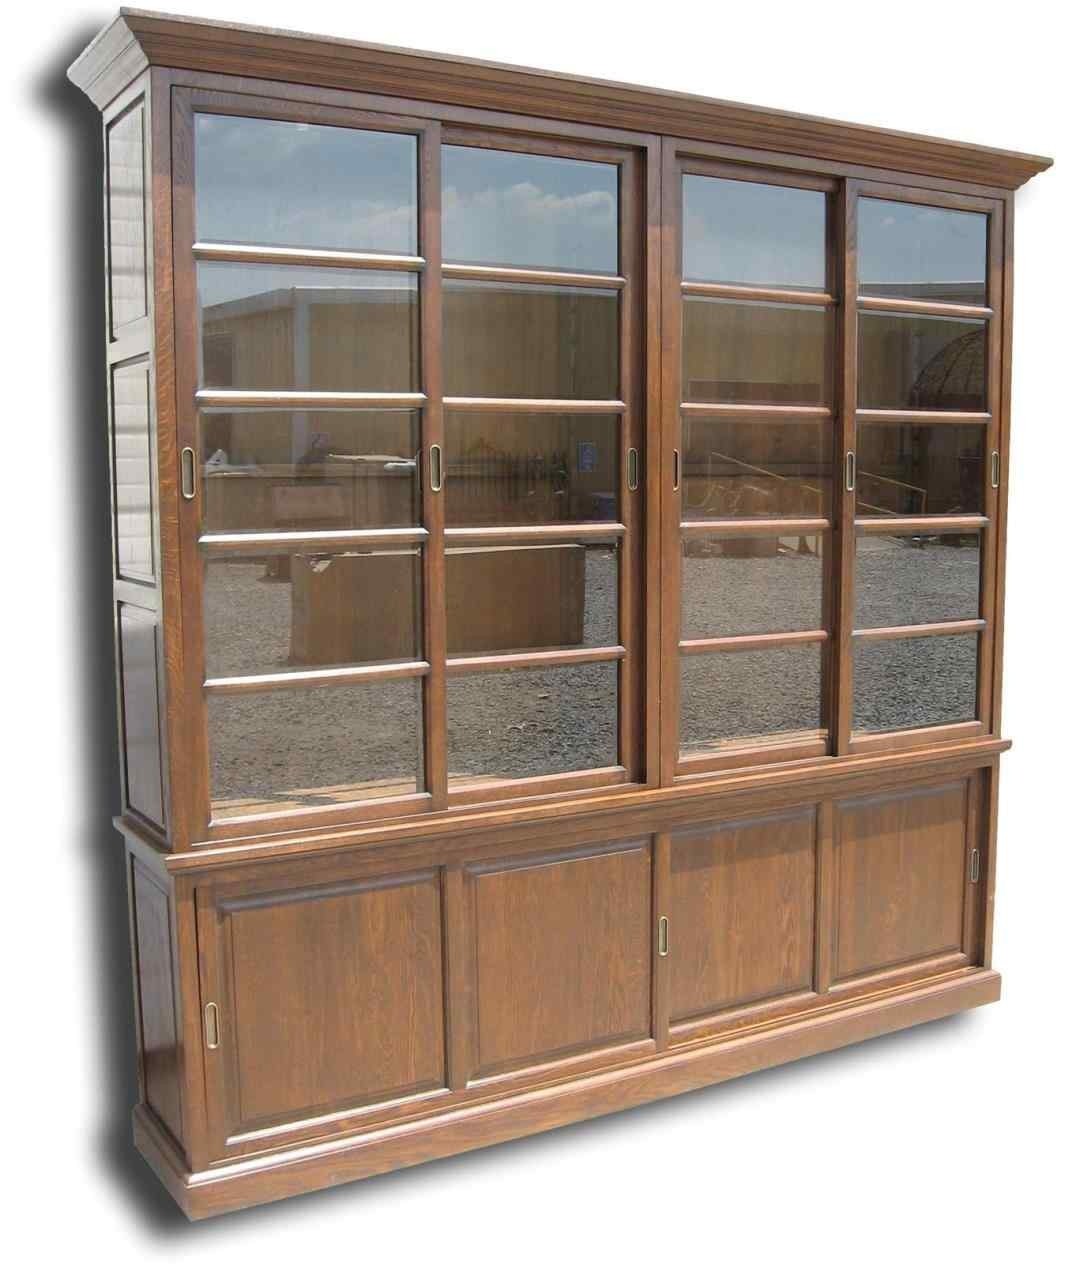 New Bookcase Solid Oak Wood Antique Finish Sliding Doors Glass Doors